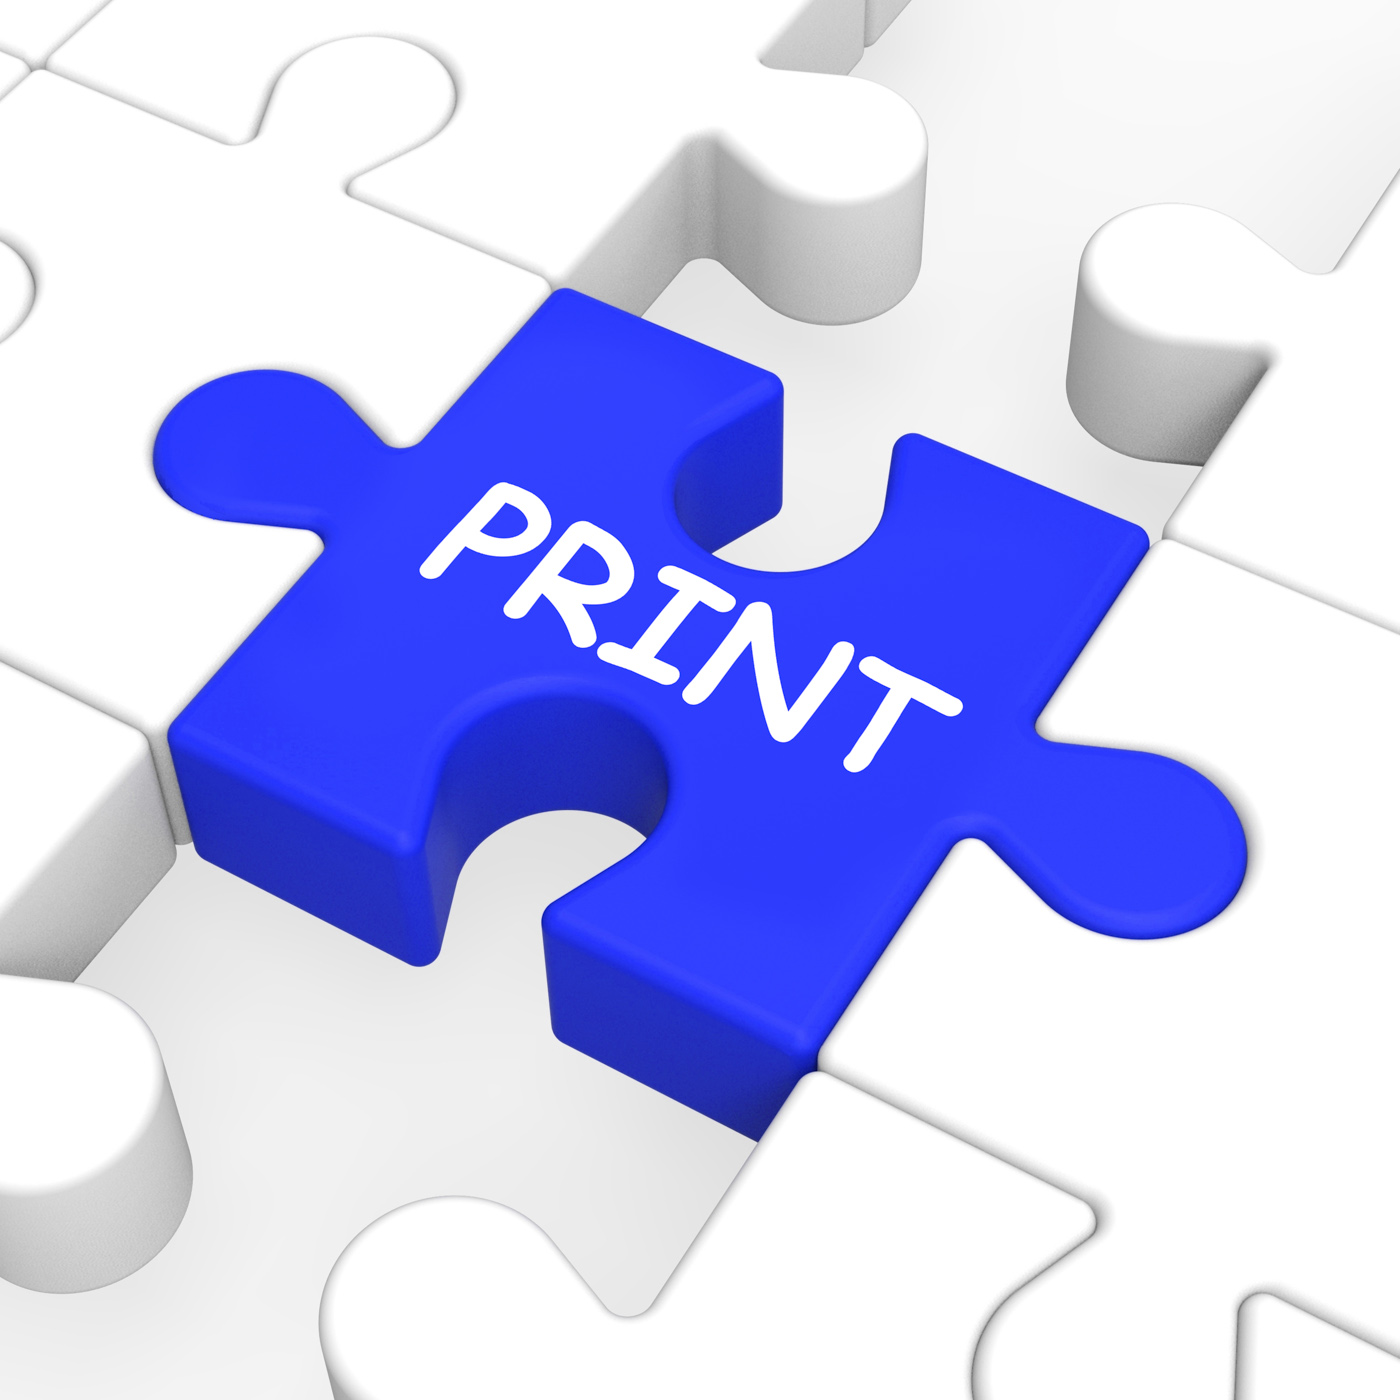 Print key shows printer printing or printout photo